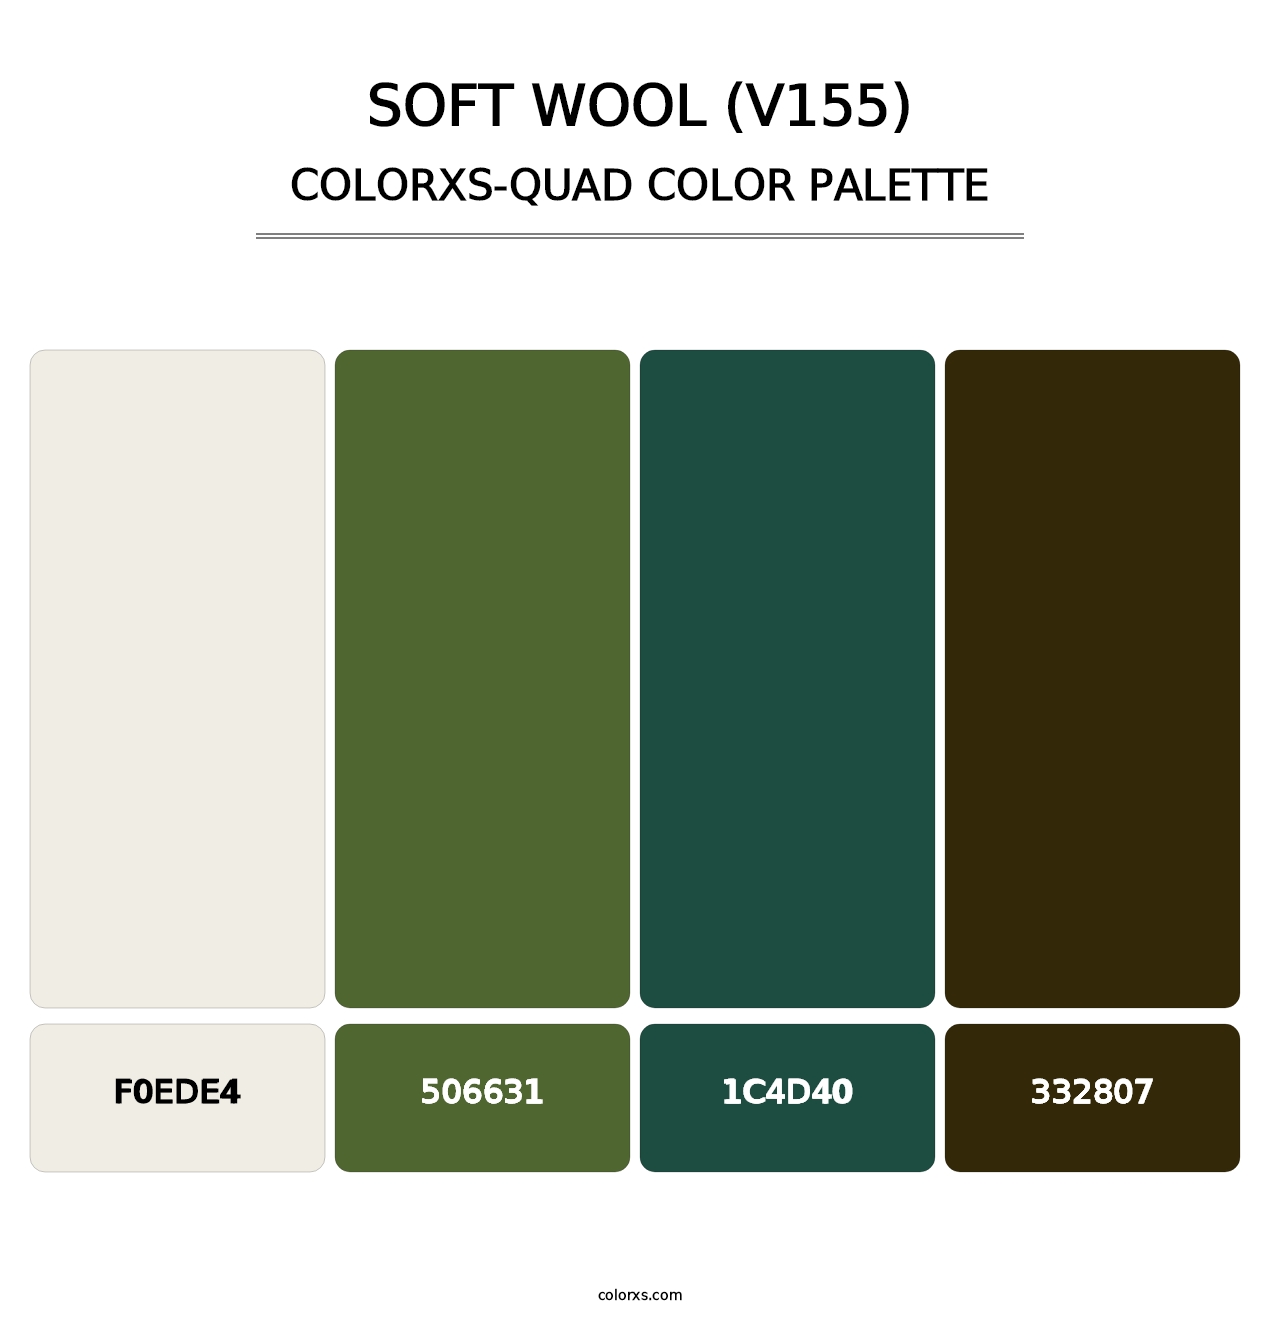 Soft Wool (V155) - Colorxs Quad Palette